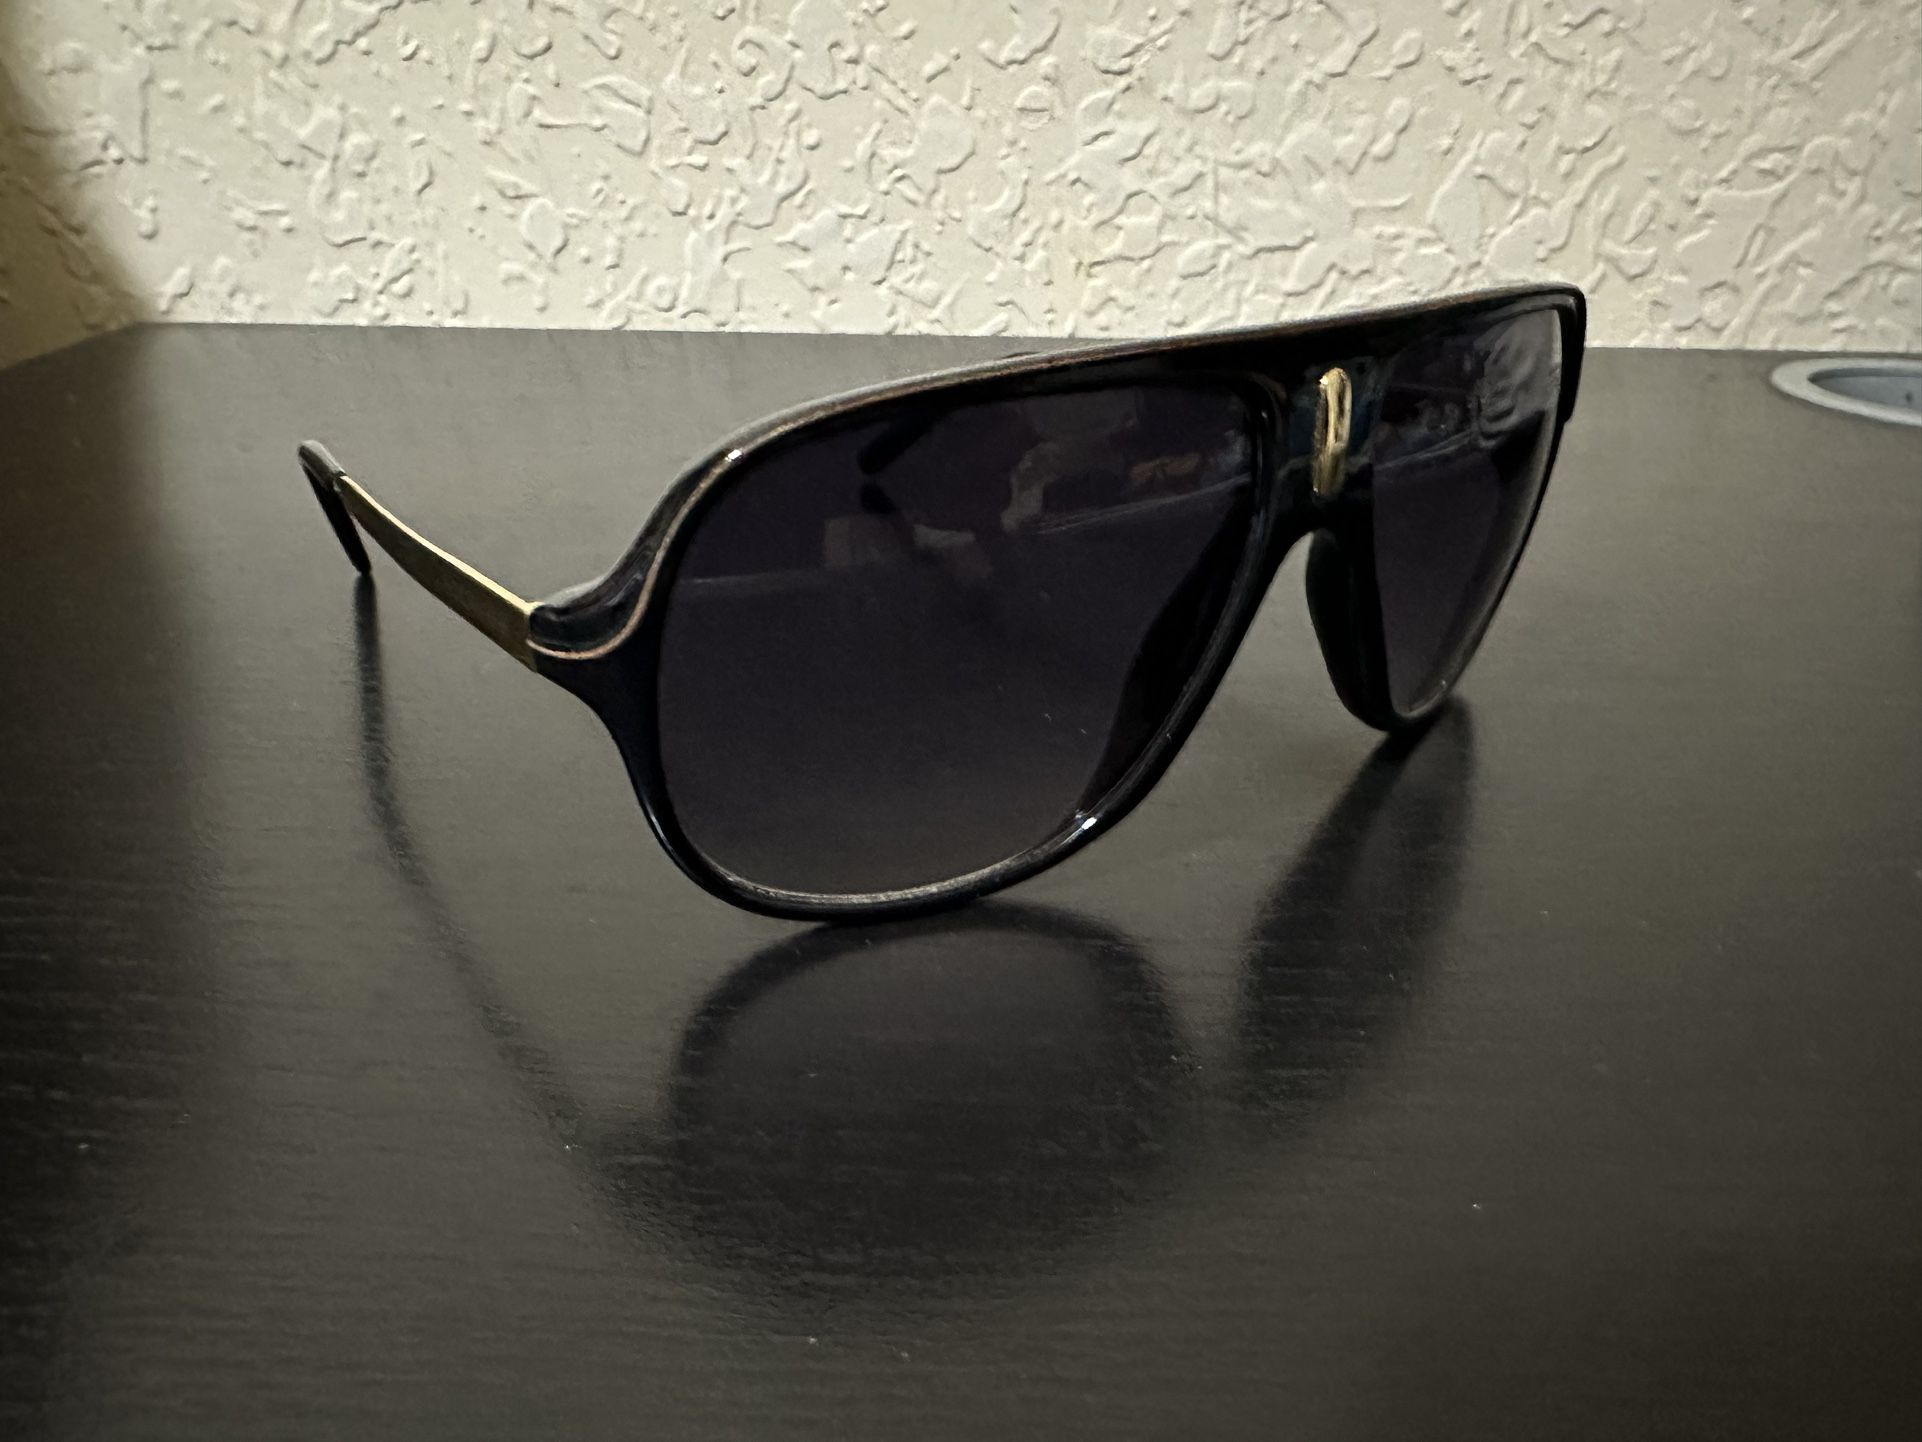 Aviator Sunglasses For Sale